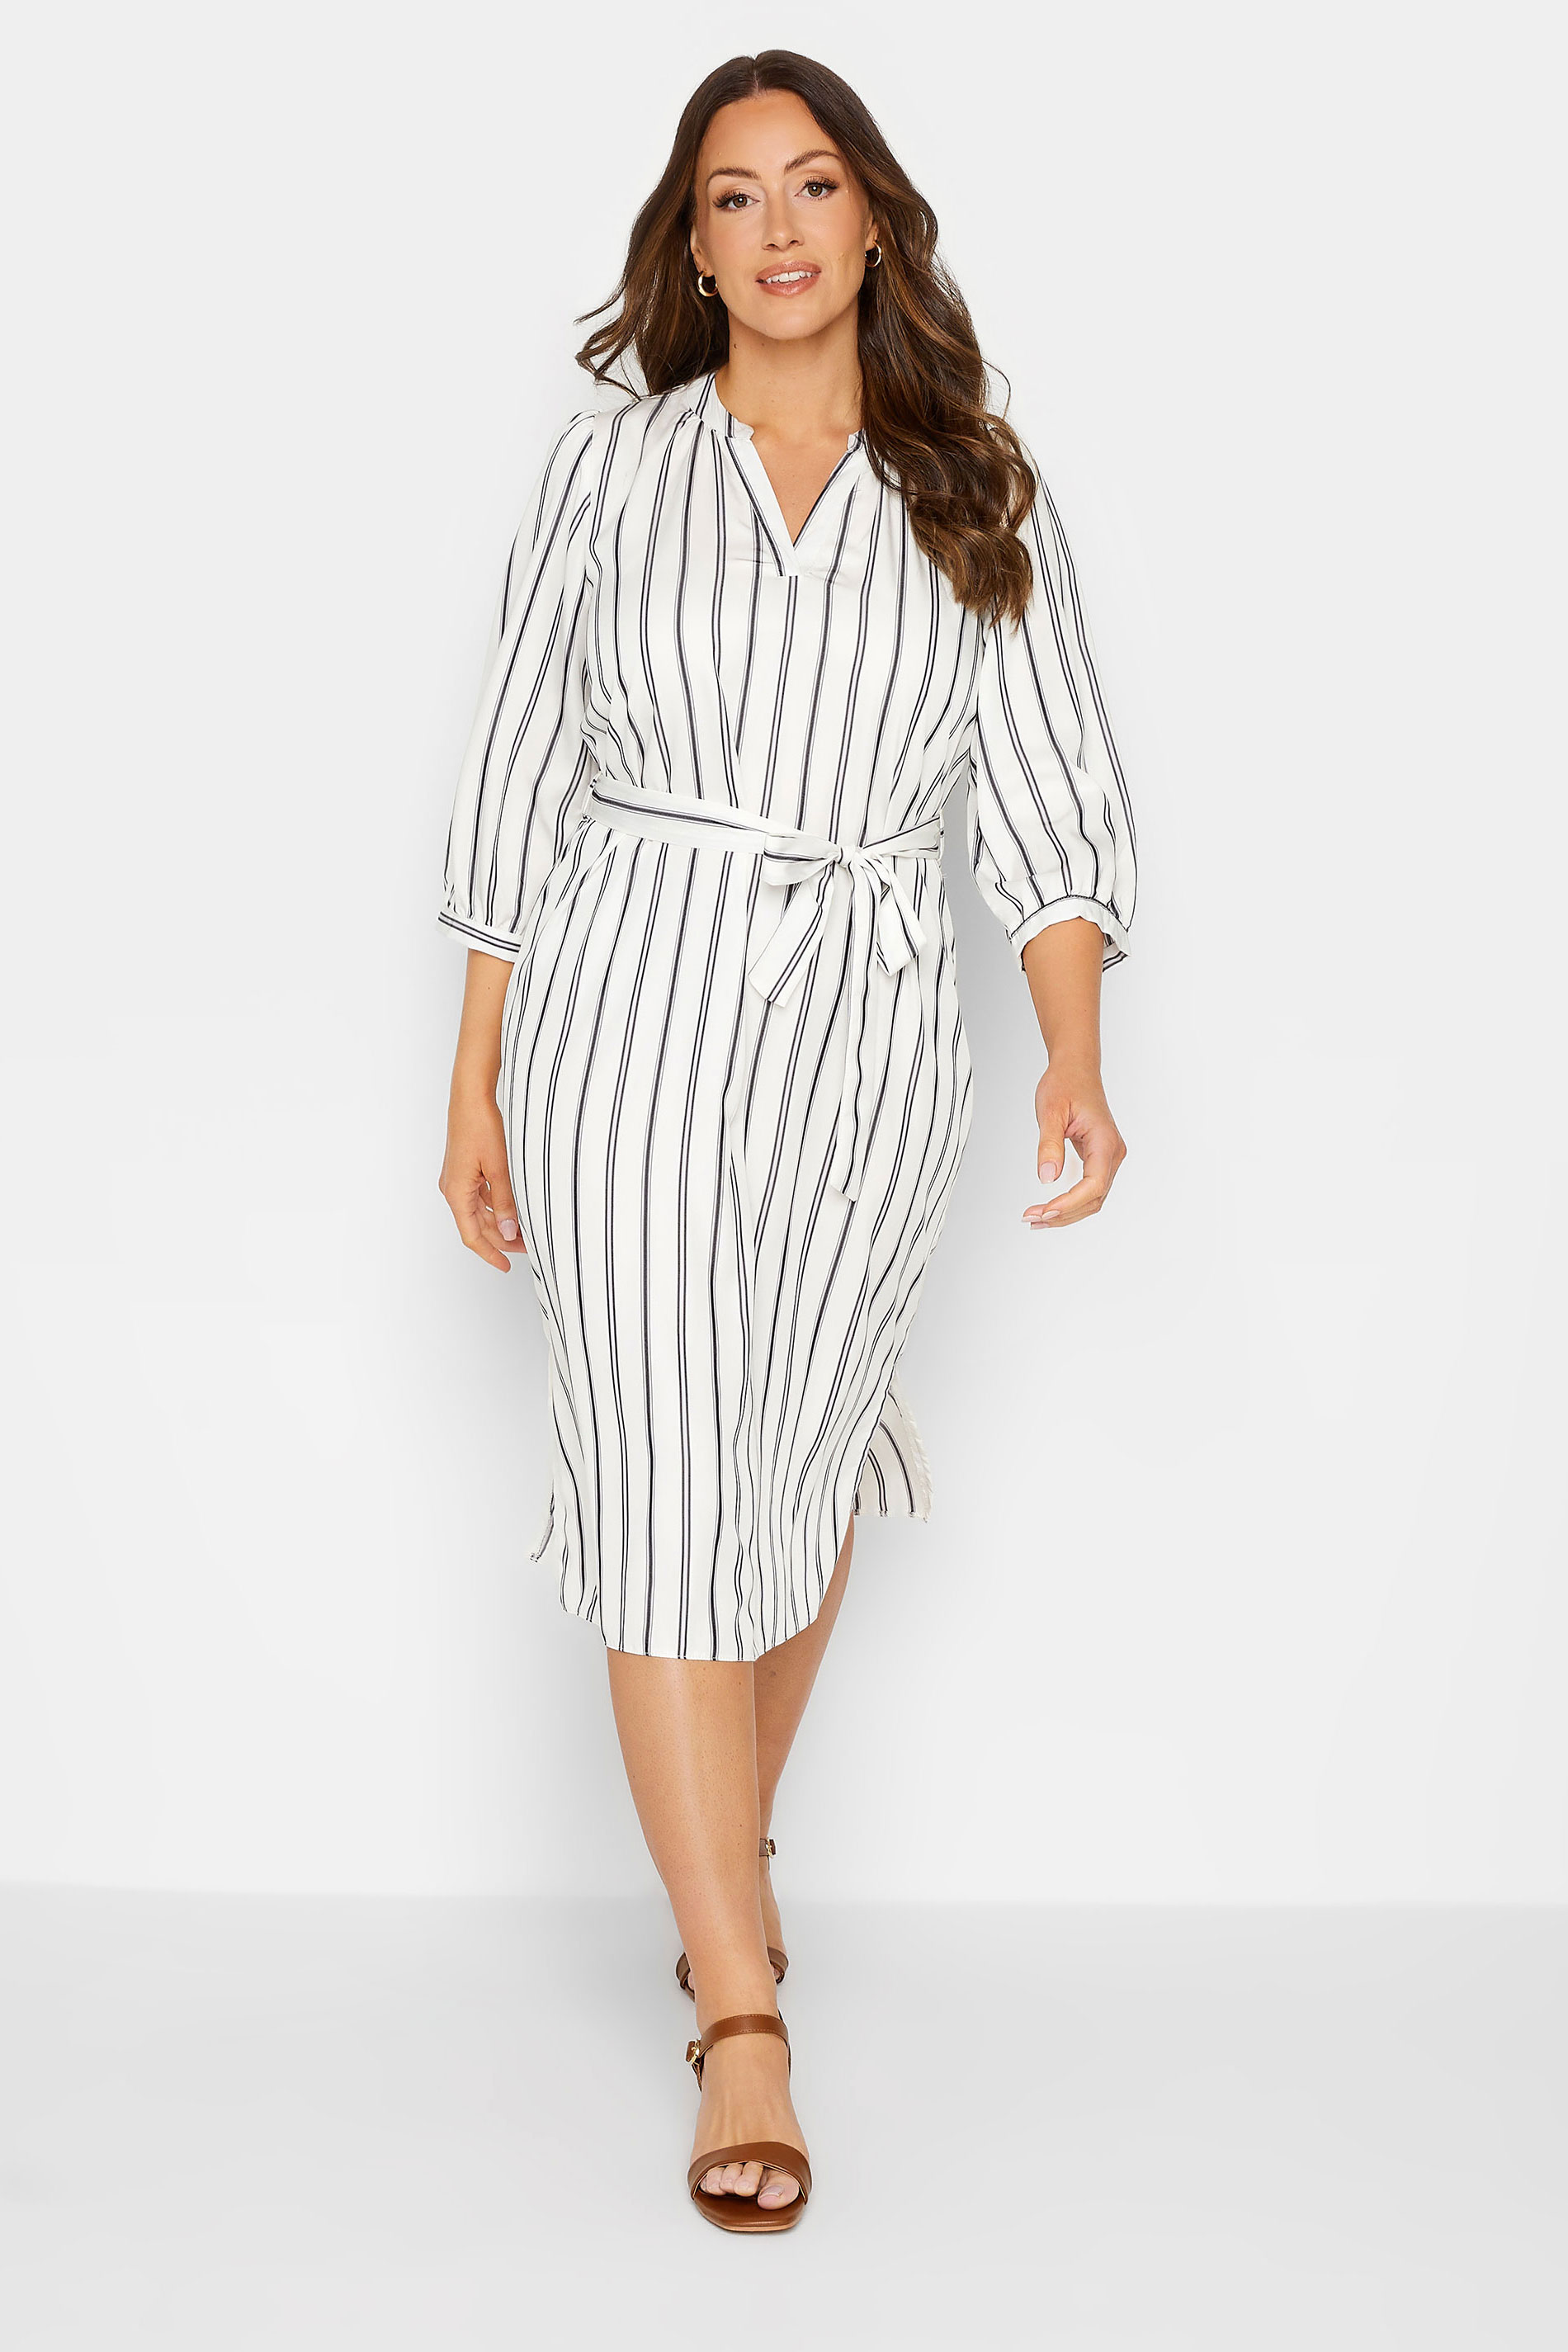 M&Co White Stripe Print Tie Waist Tunic Dress | M&Co 1